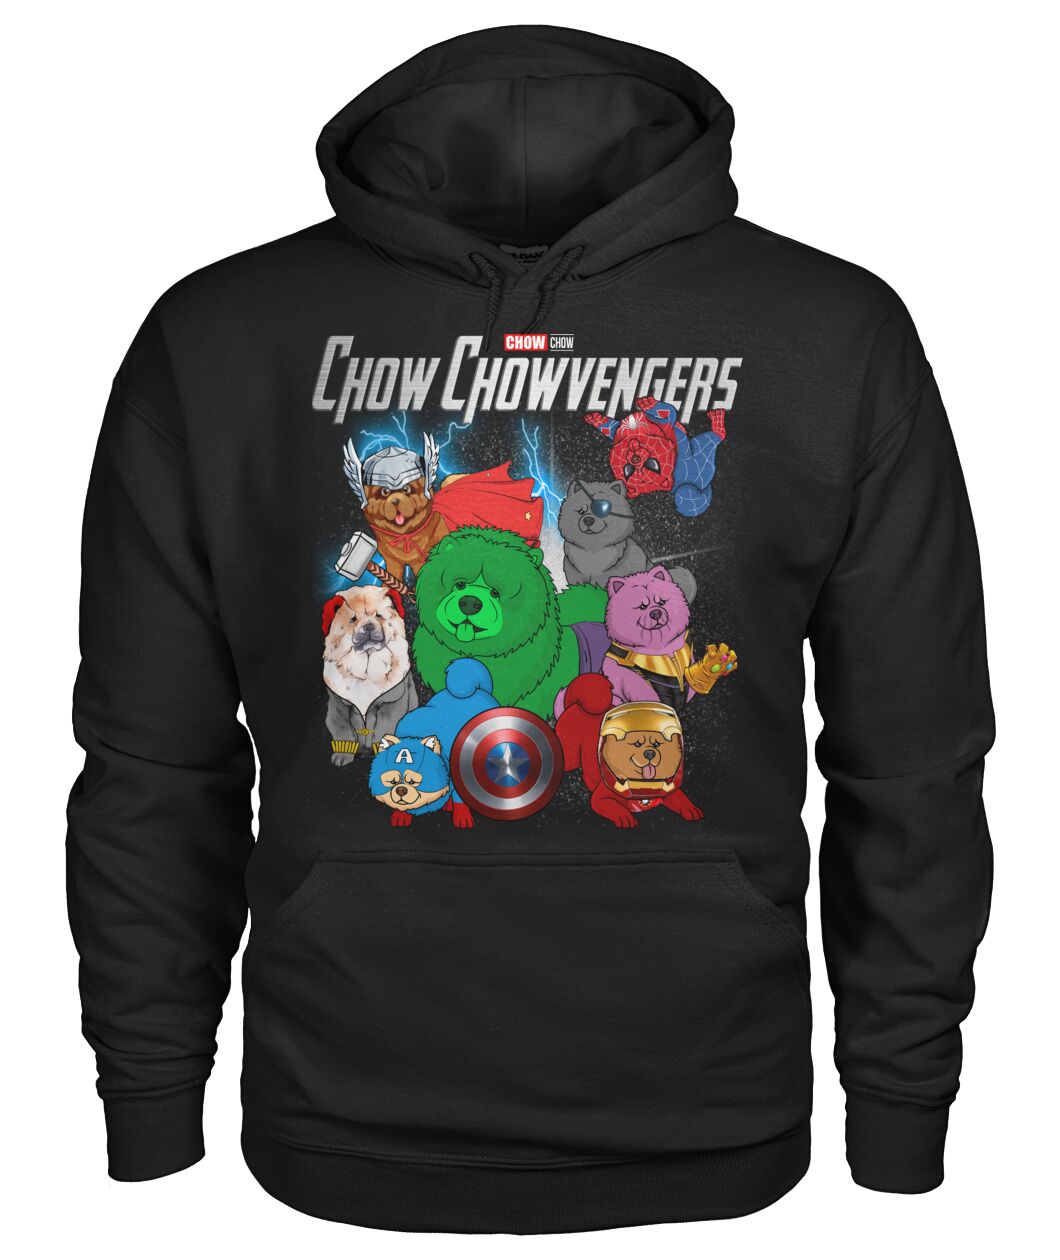 Chow Chowvengers 3D Hoodie, Shirt 9